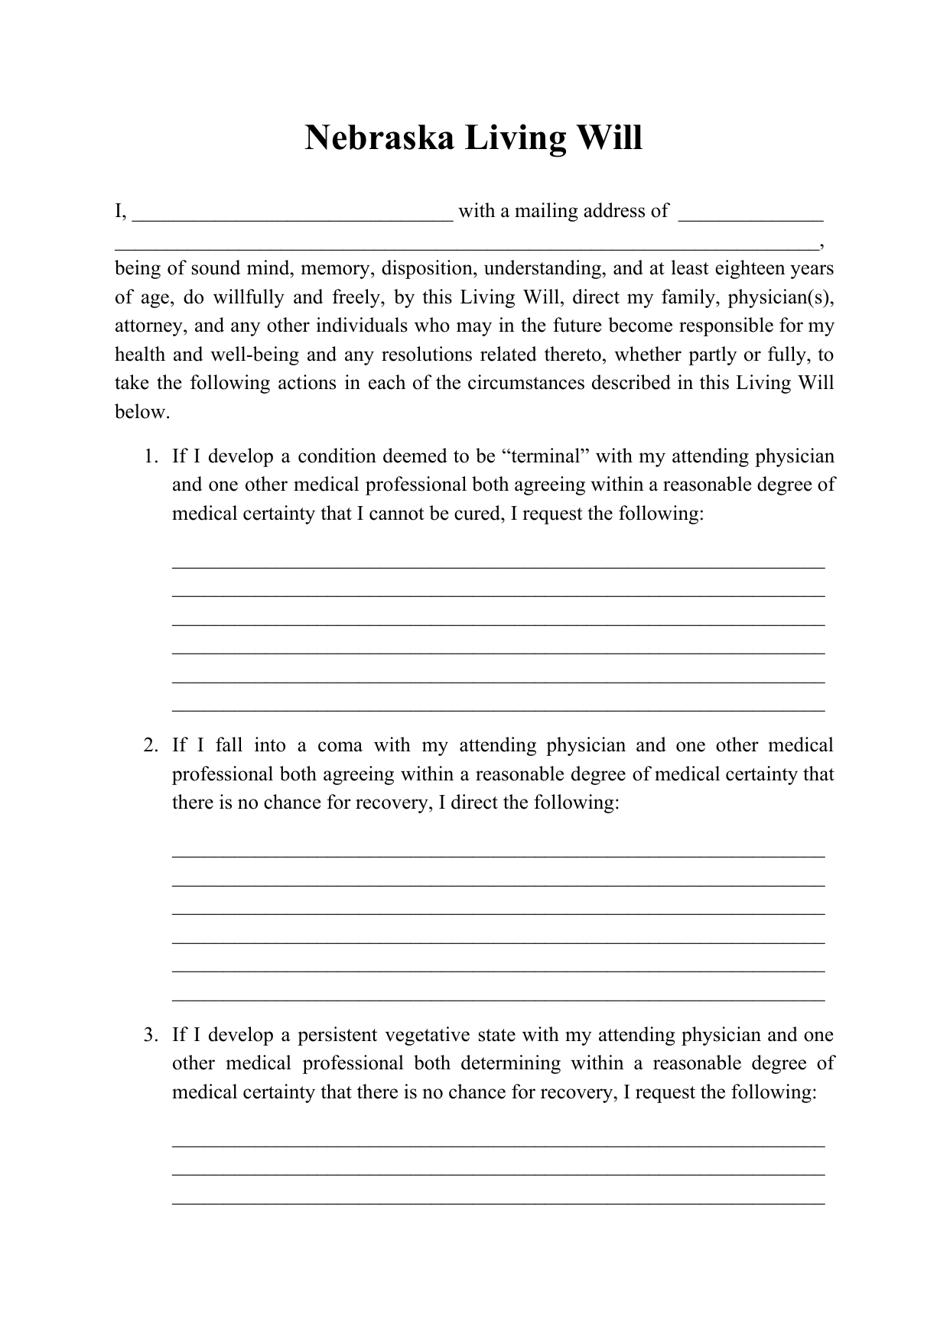 nebraska-living-will-form-download-printable-pdf-templateroller